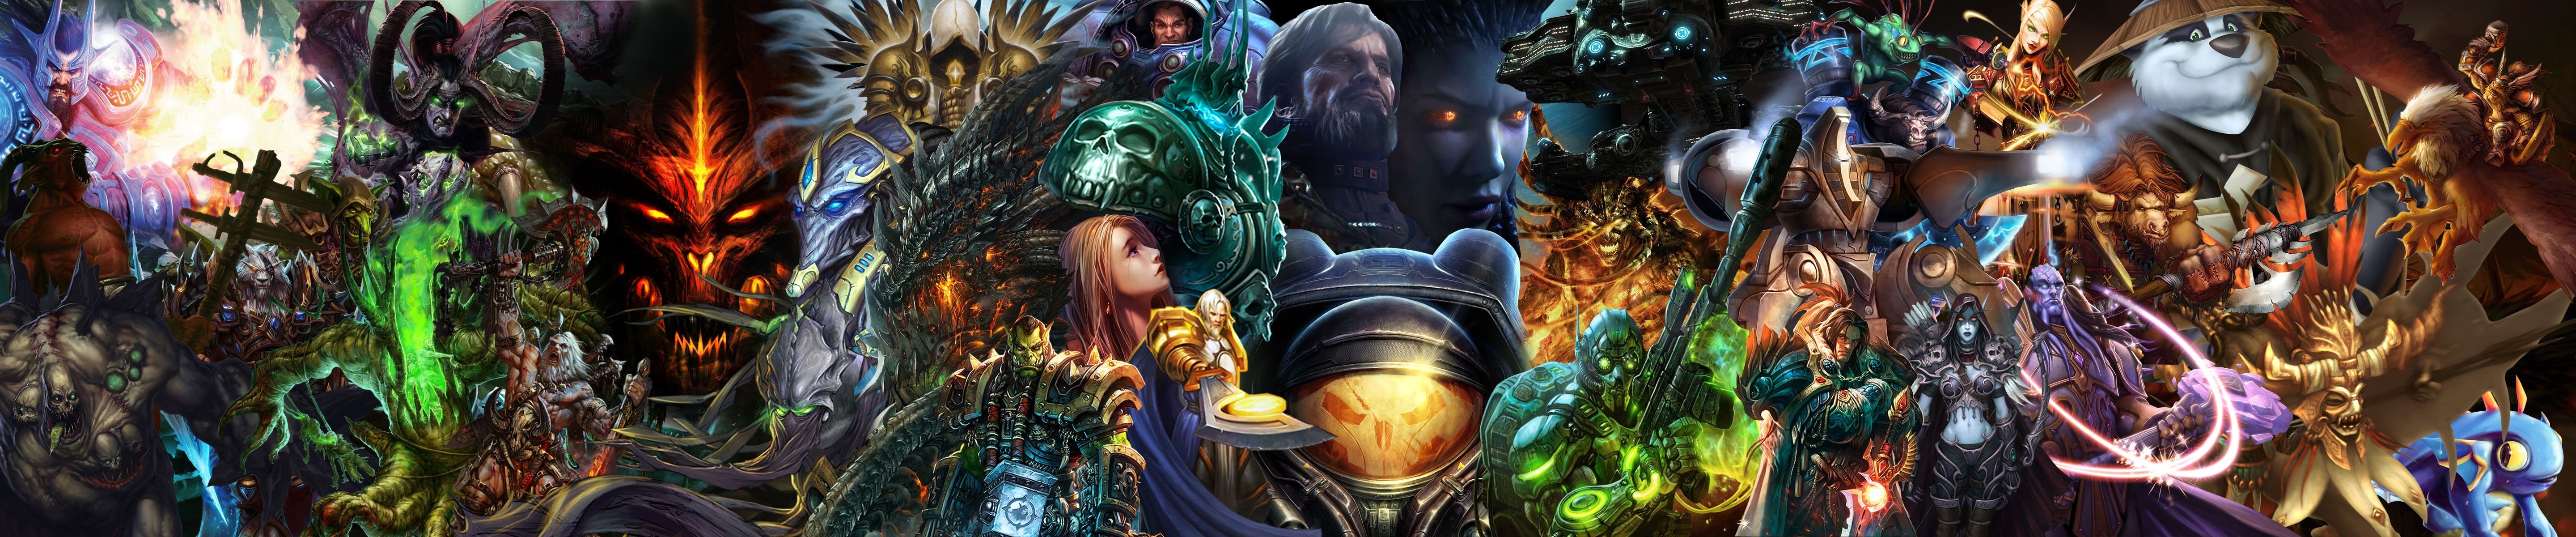 World Of Warcraft HD Wallpaper | Background Image | 5760x1200 | ID